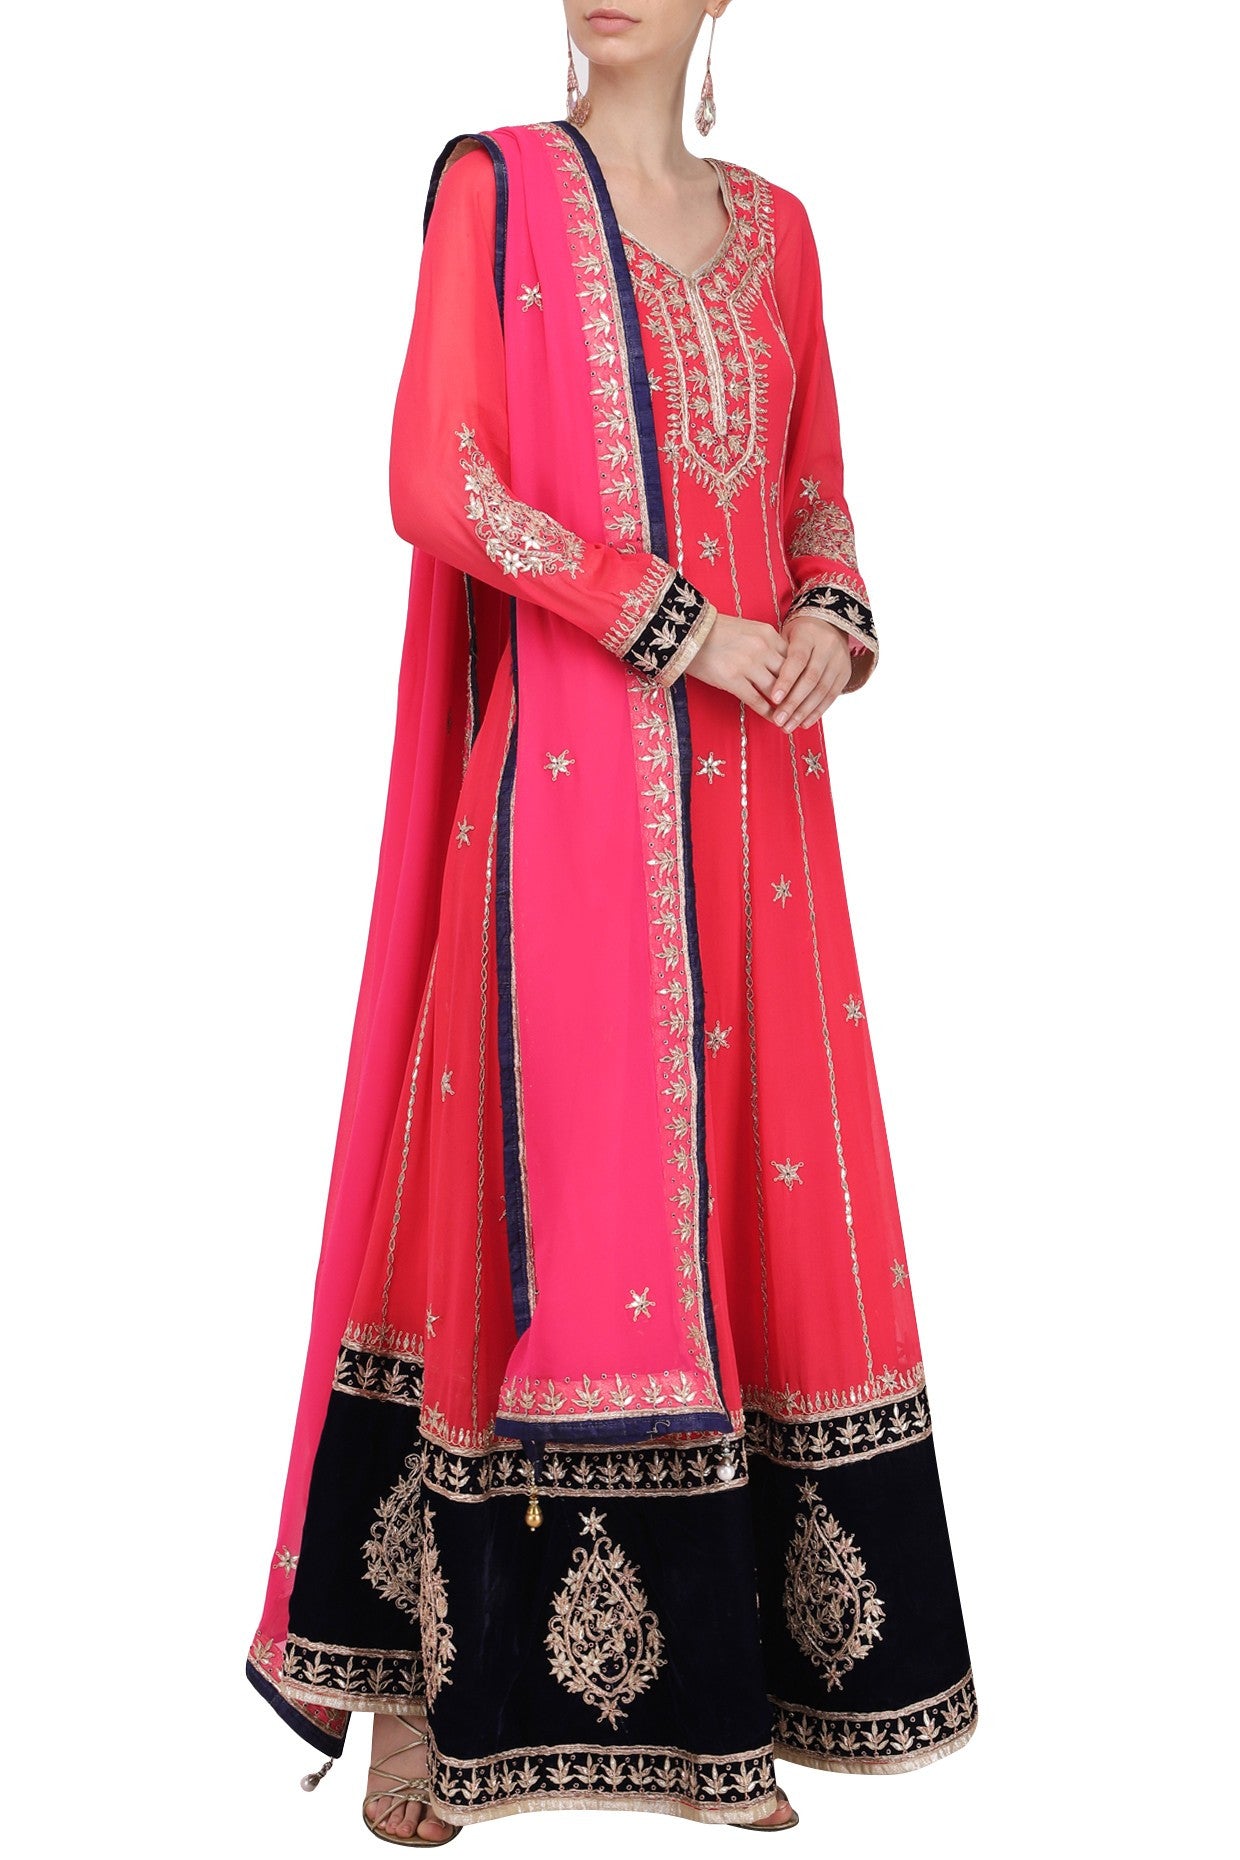 Designer Red Panelled Kalidar with Pink Dupatta